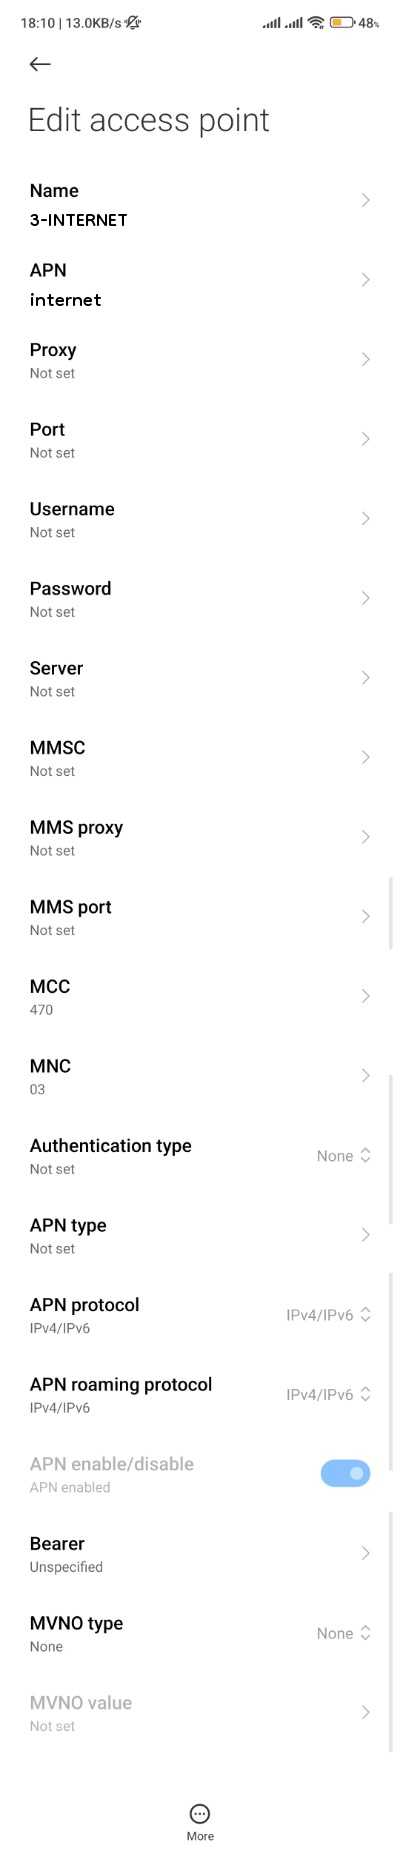 3 Macau APN Setiings for Android iPhone 3G 4G Internet